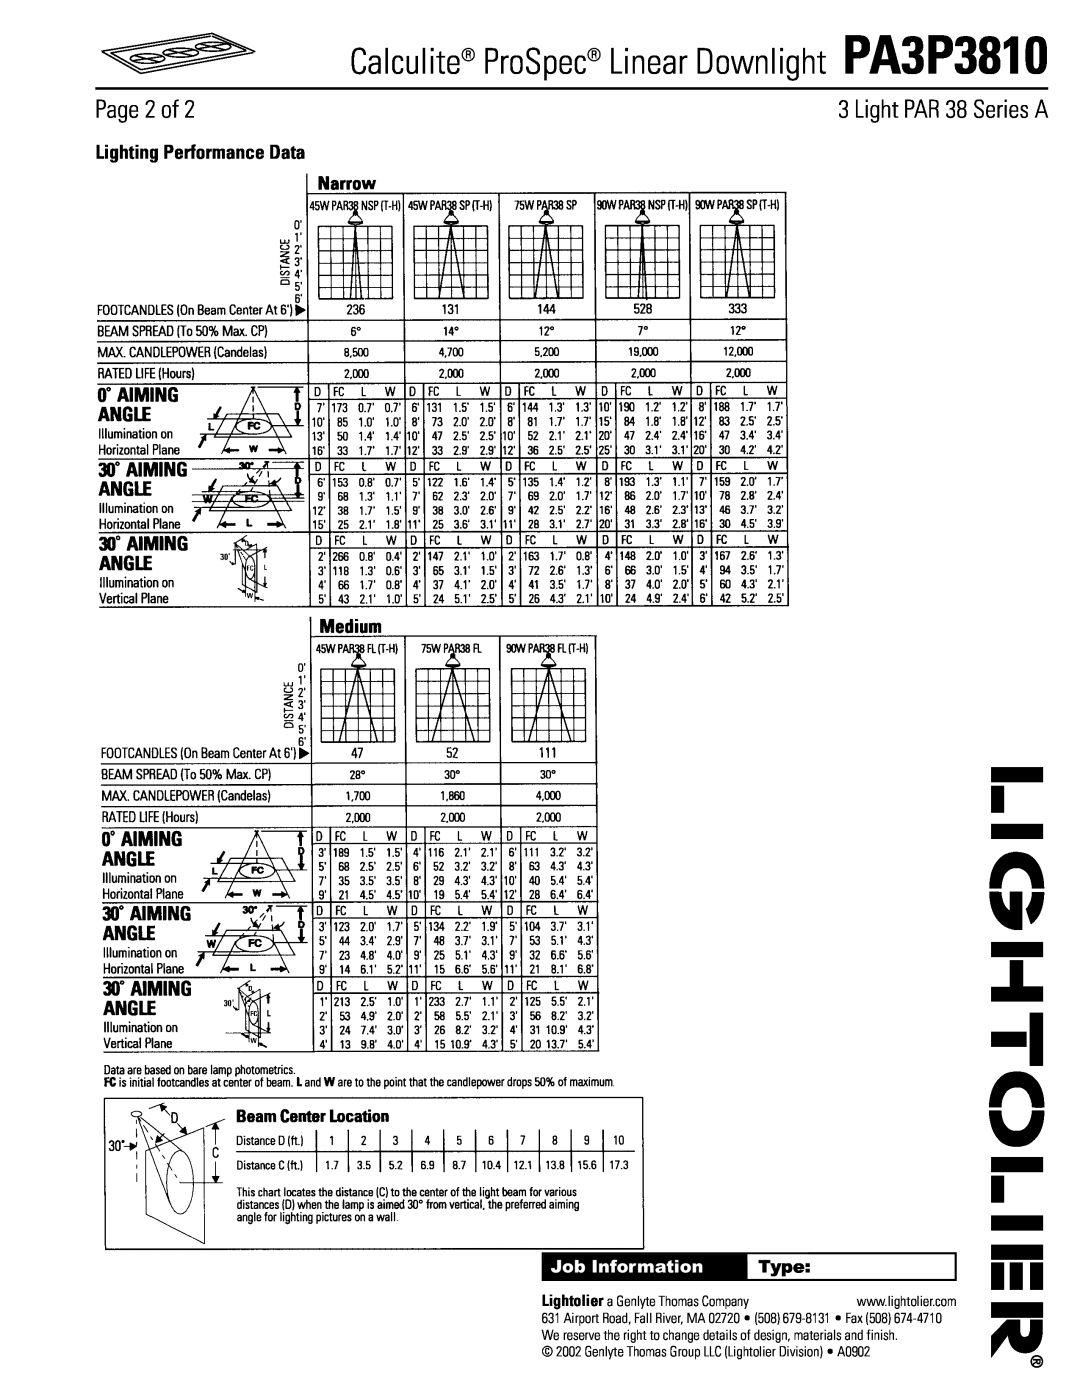 Lightolier Lighting Performance Data, Calculite ProSpec Linear Downlight PA3P3810, Page 2 of, Light PAR 38 Series A 